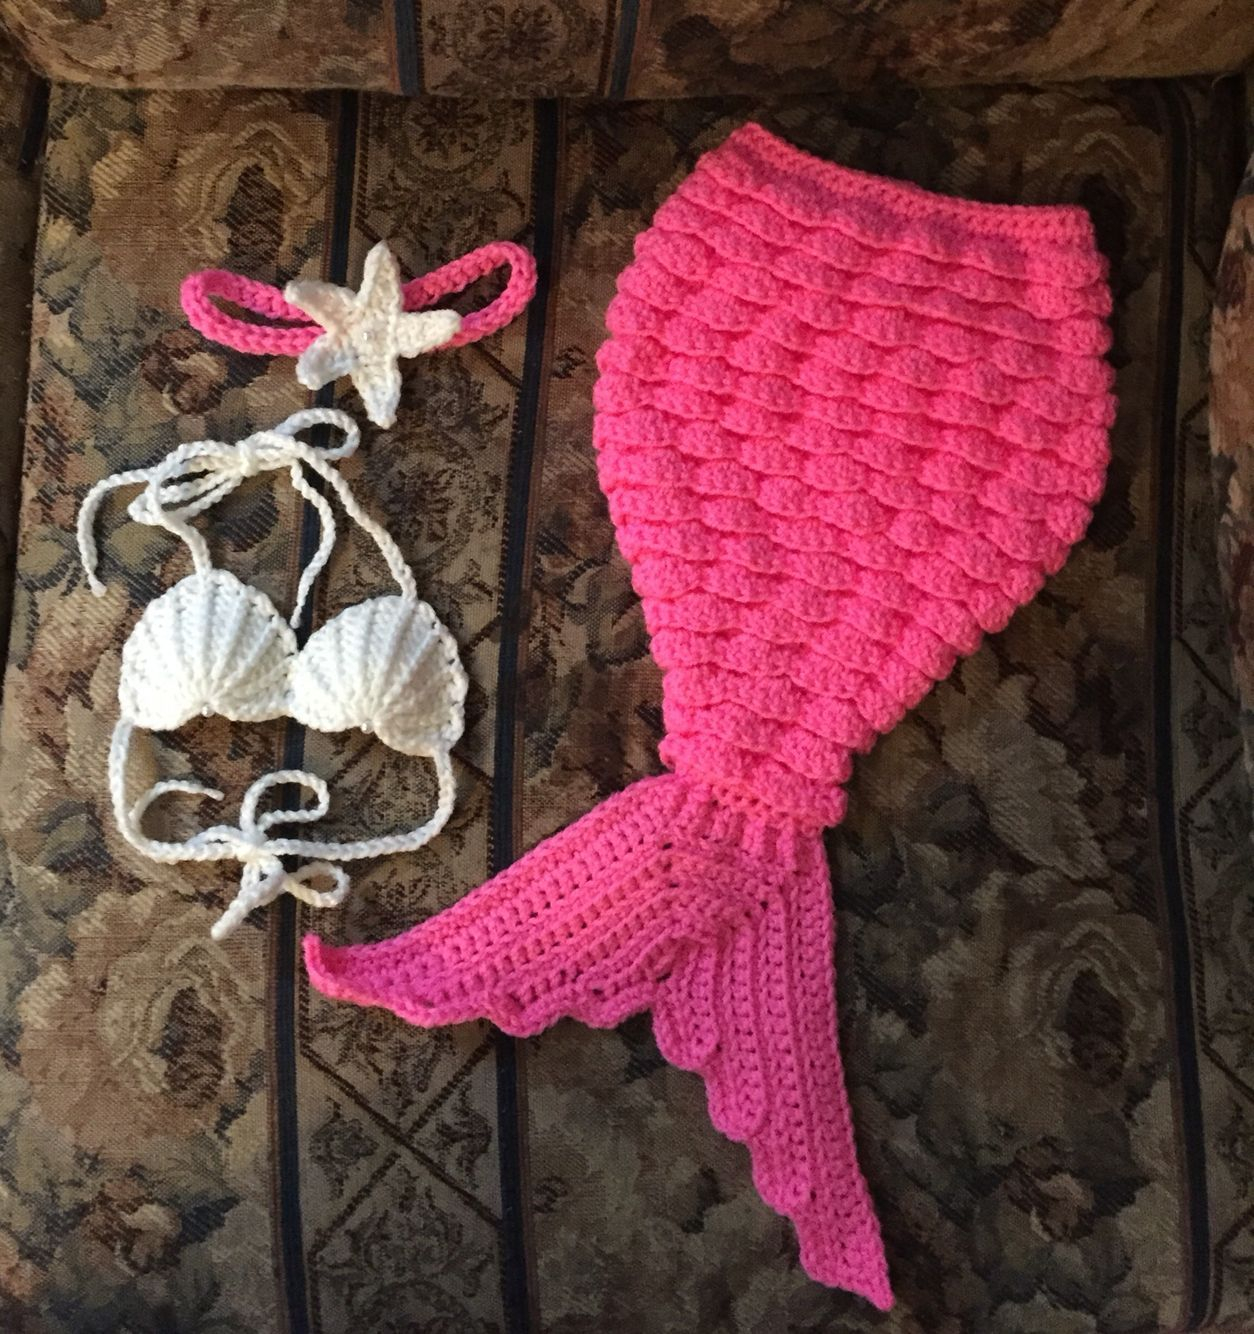 Mermaid Crochet Pattern For Baby Crochet Newborn Mermaid Tail Cocoon Set More Crochet Pinterest